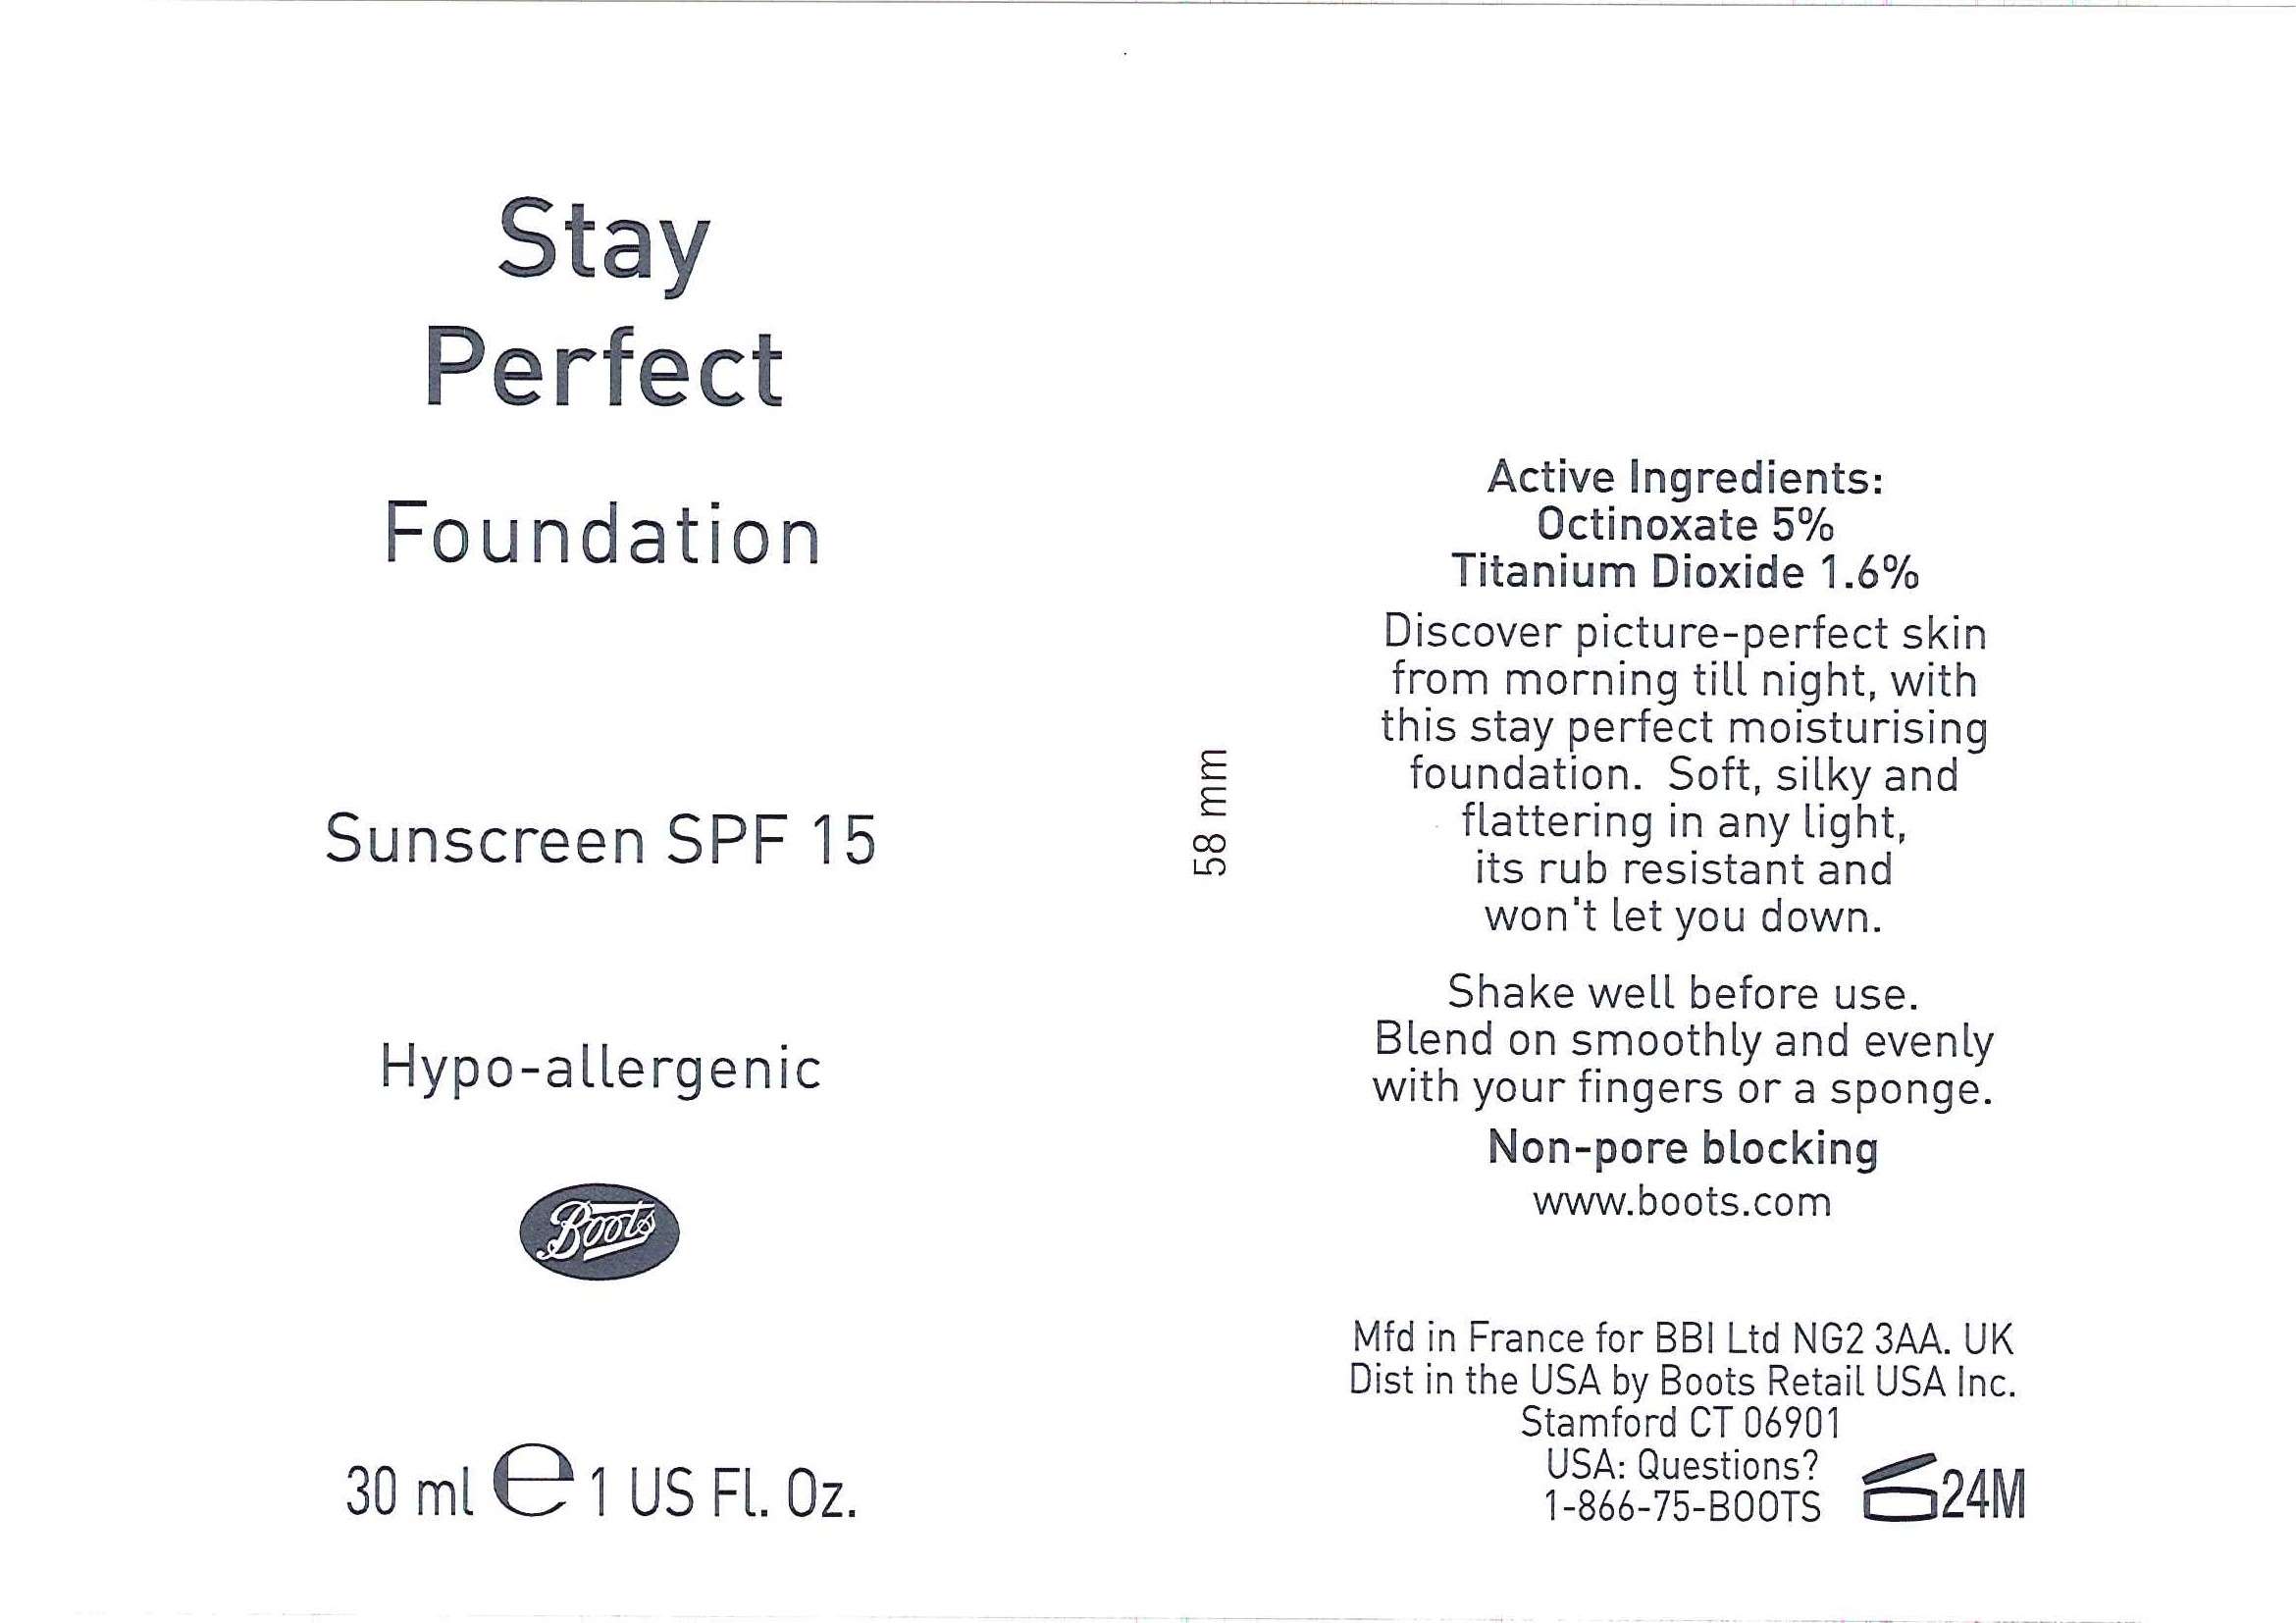 No7 Stay Perfect Foundation Sunscreen SPF 15 Truffle